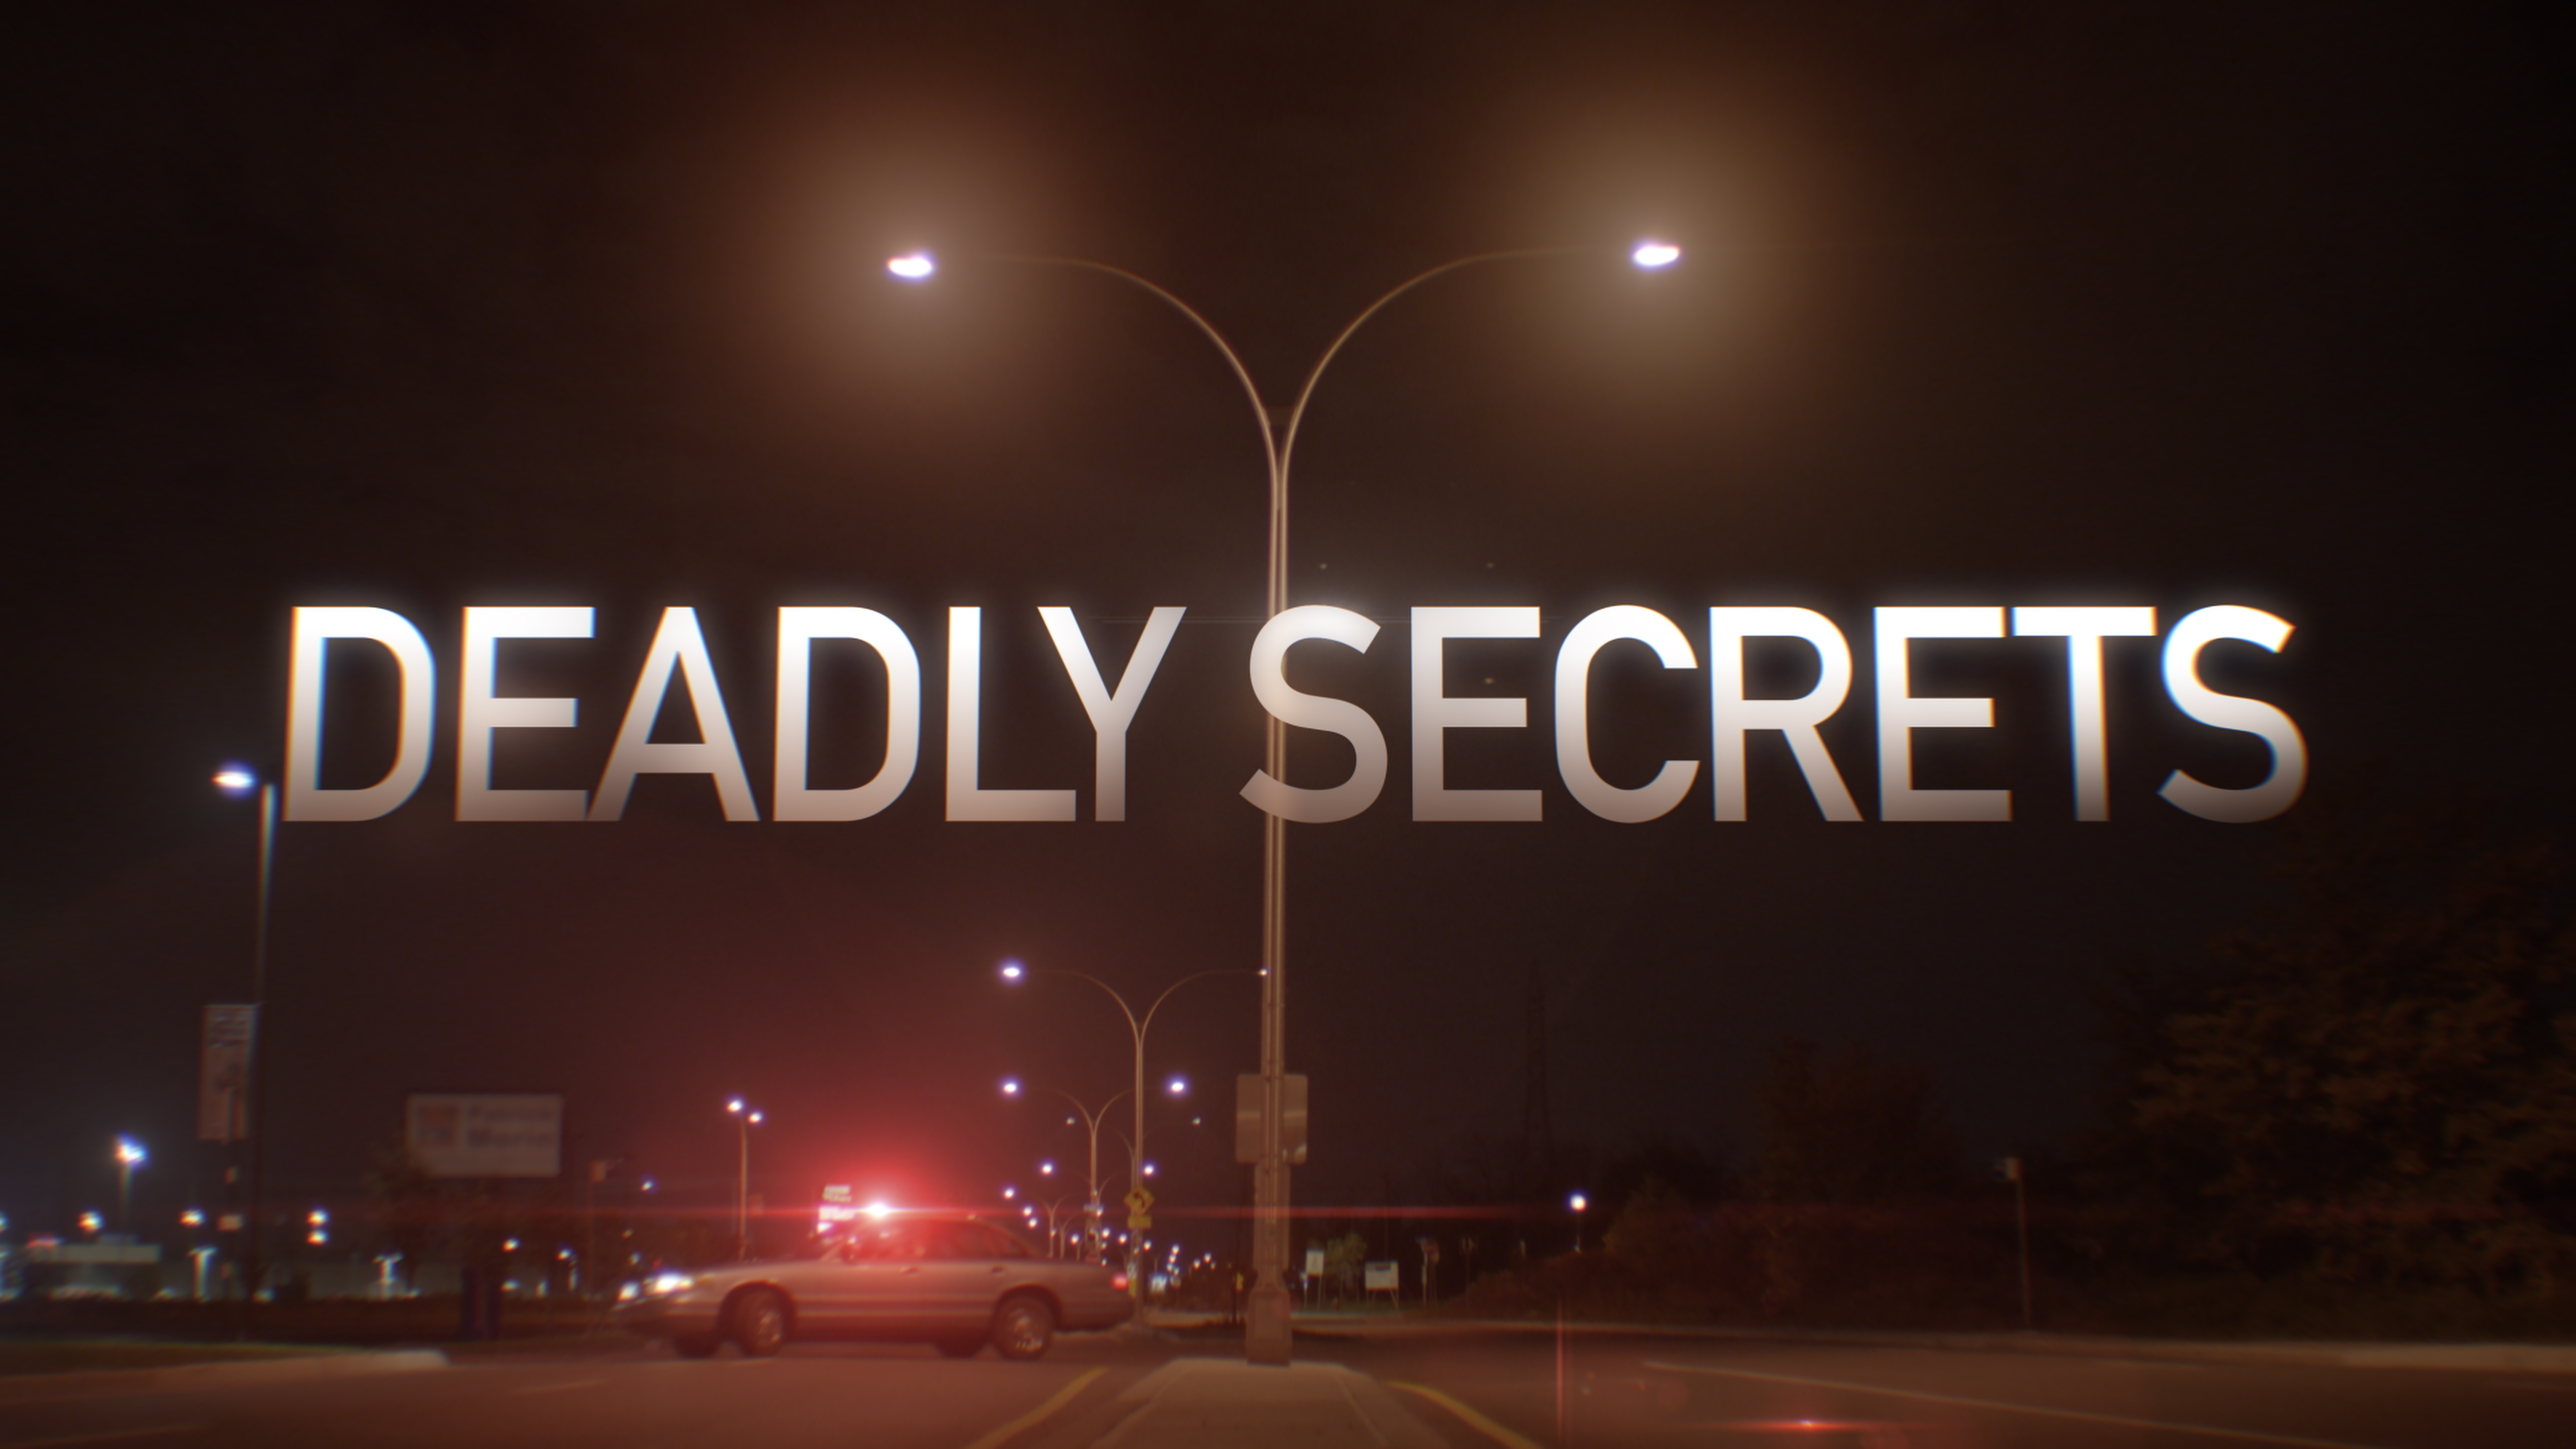 Deadly Secrets (2019)